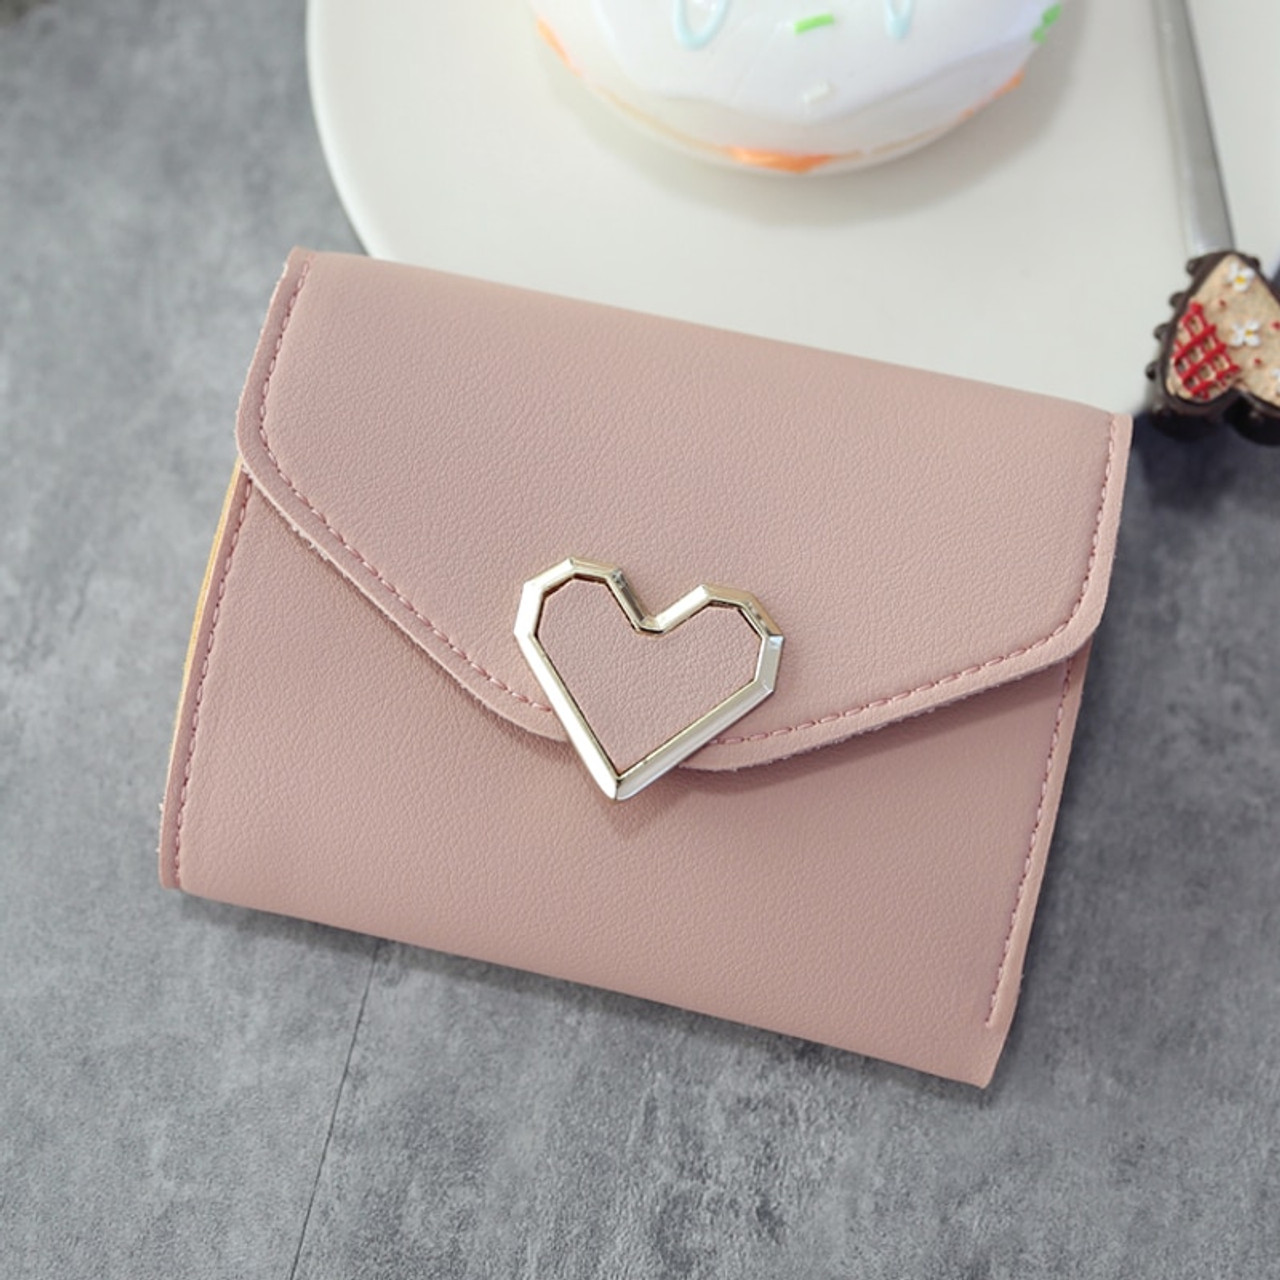 Princess Mini Pearl Handbag For Girls Bowknot Party Bag, Linen Purse, And  Gift From Nan08, $11.81 | DHgate.Com